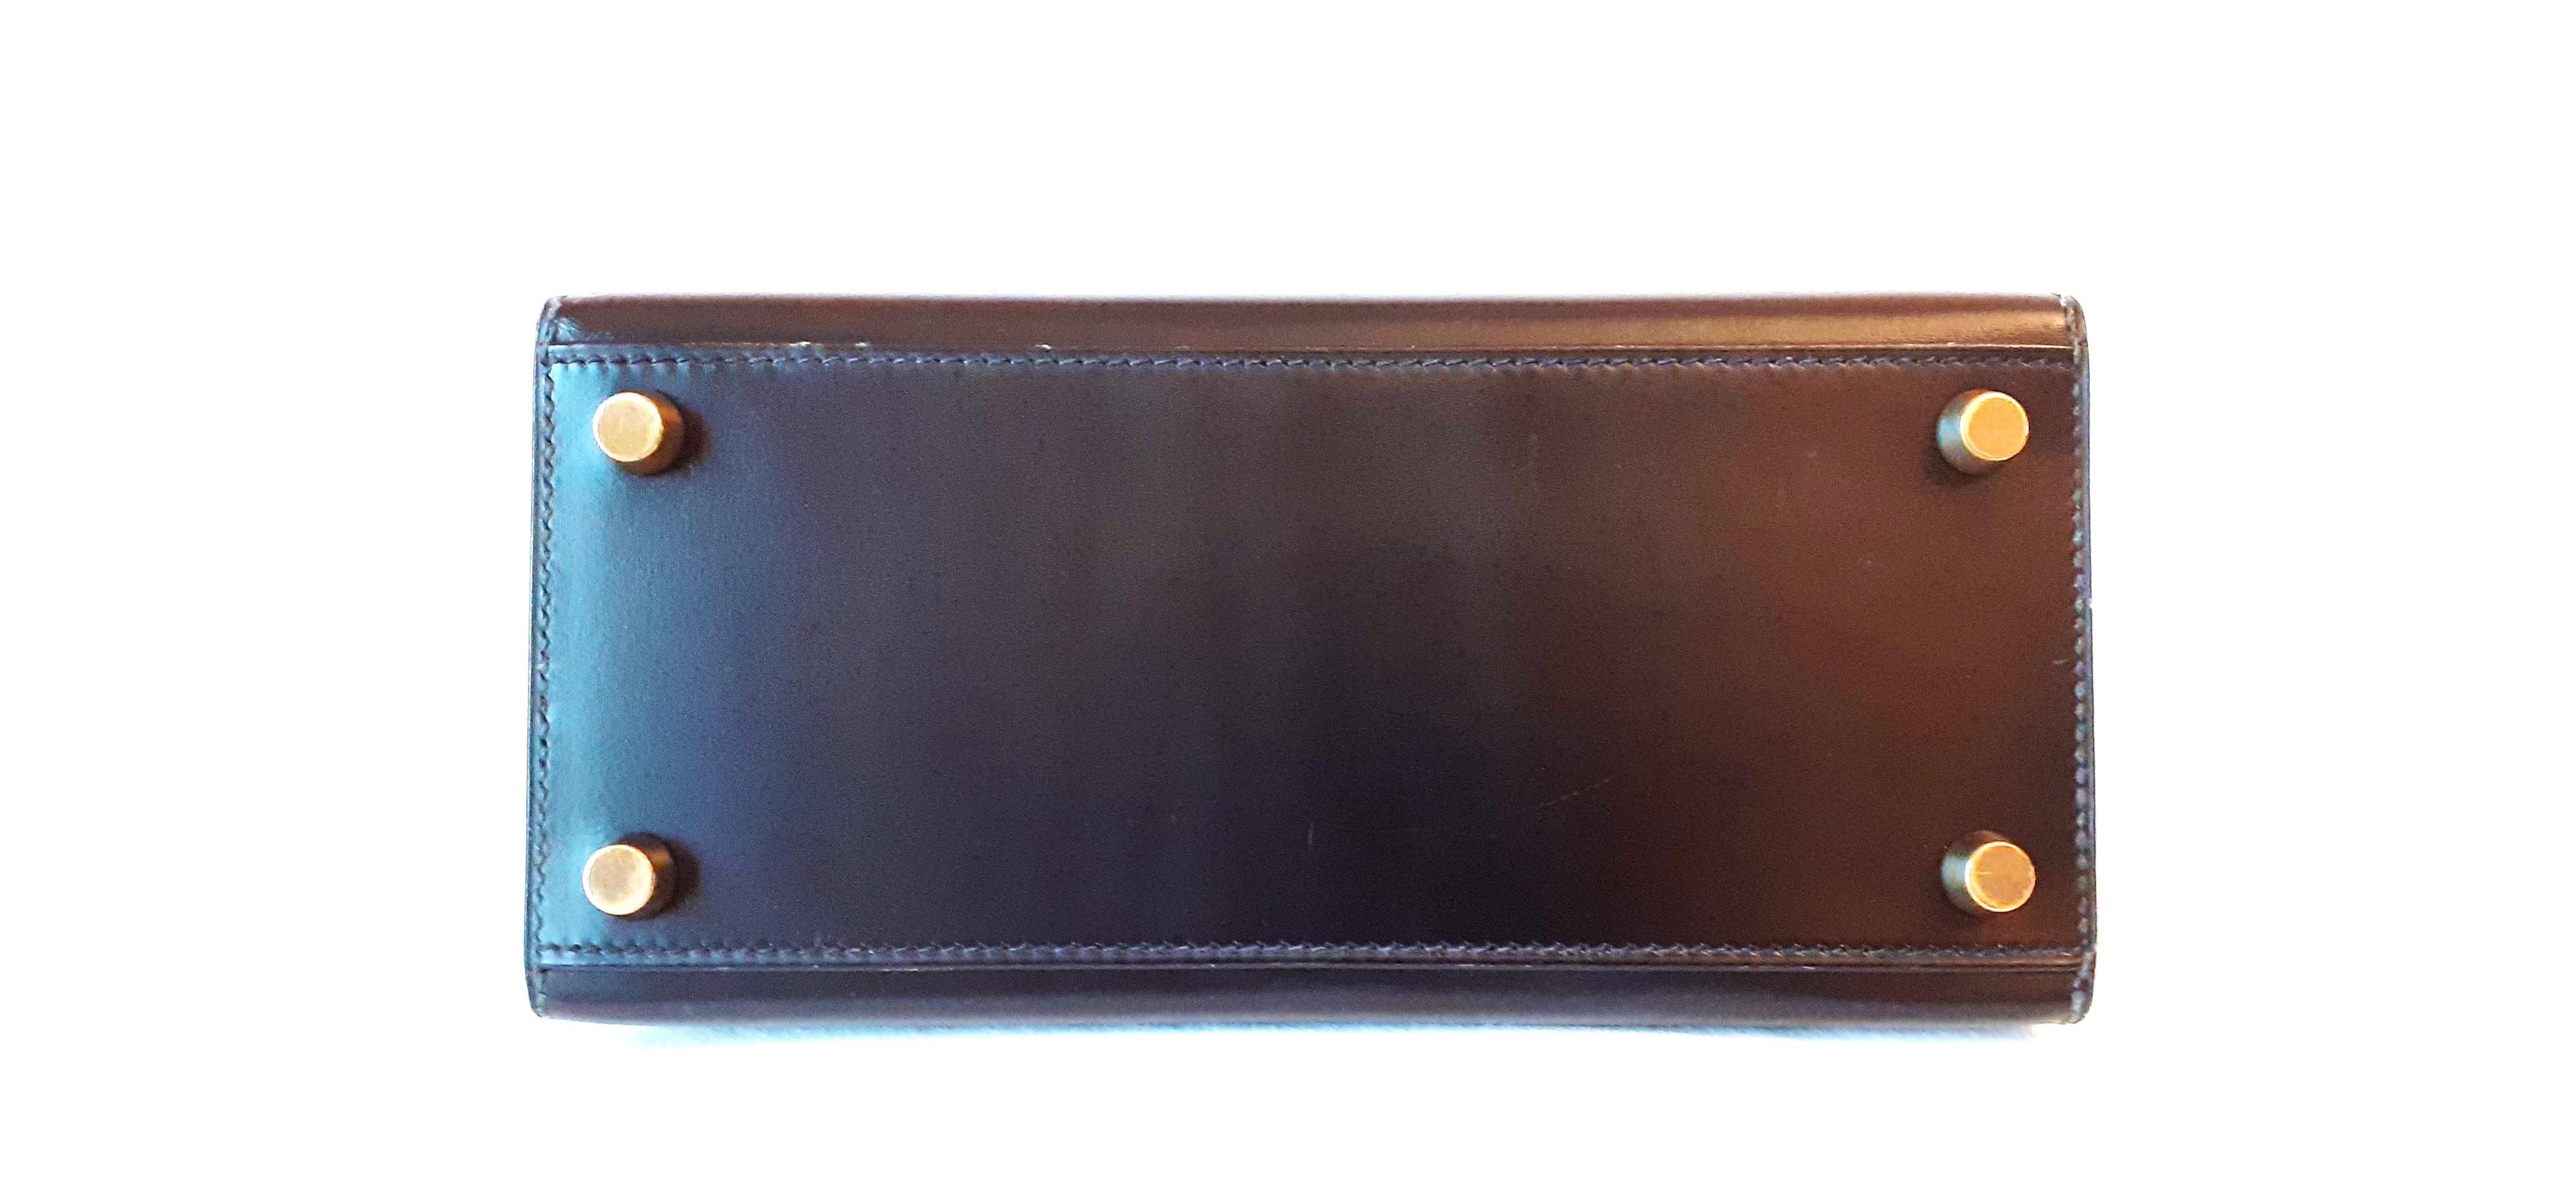 Hermès Vintage Mini Kelly Sellier Bag Black Box Leather Ghw 20 cm 4